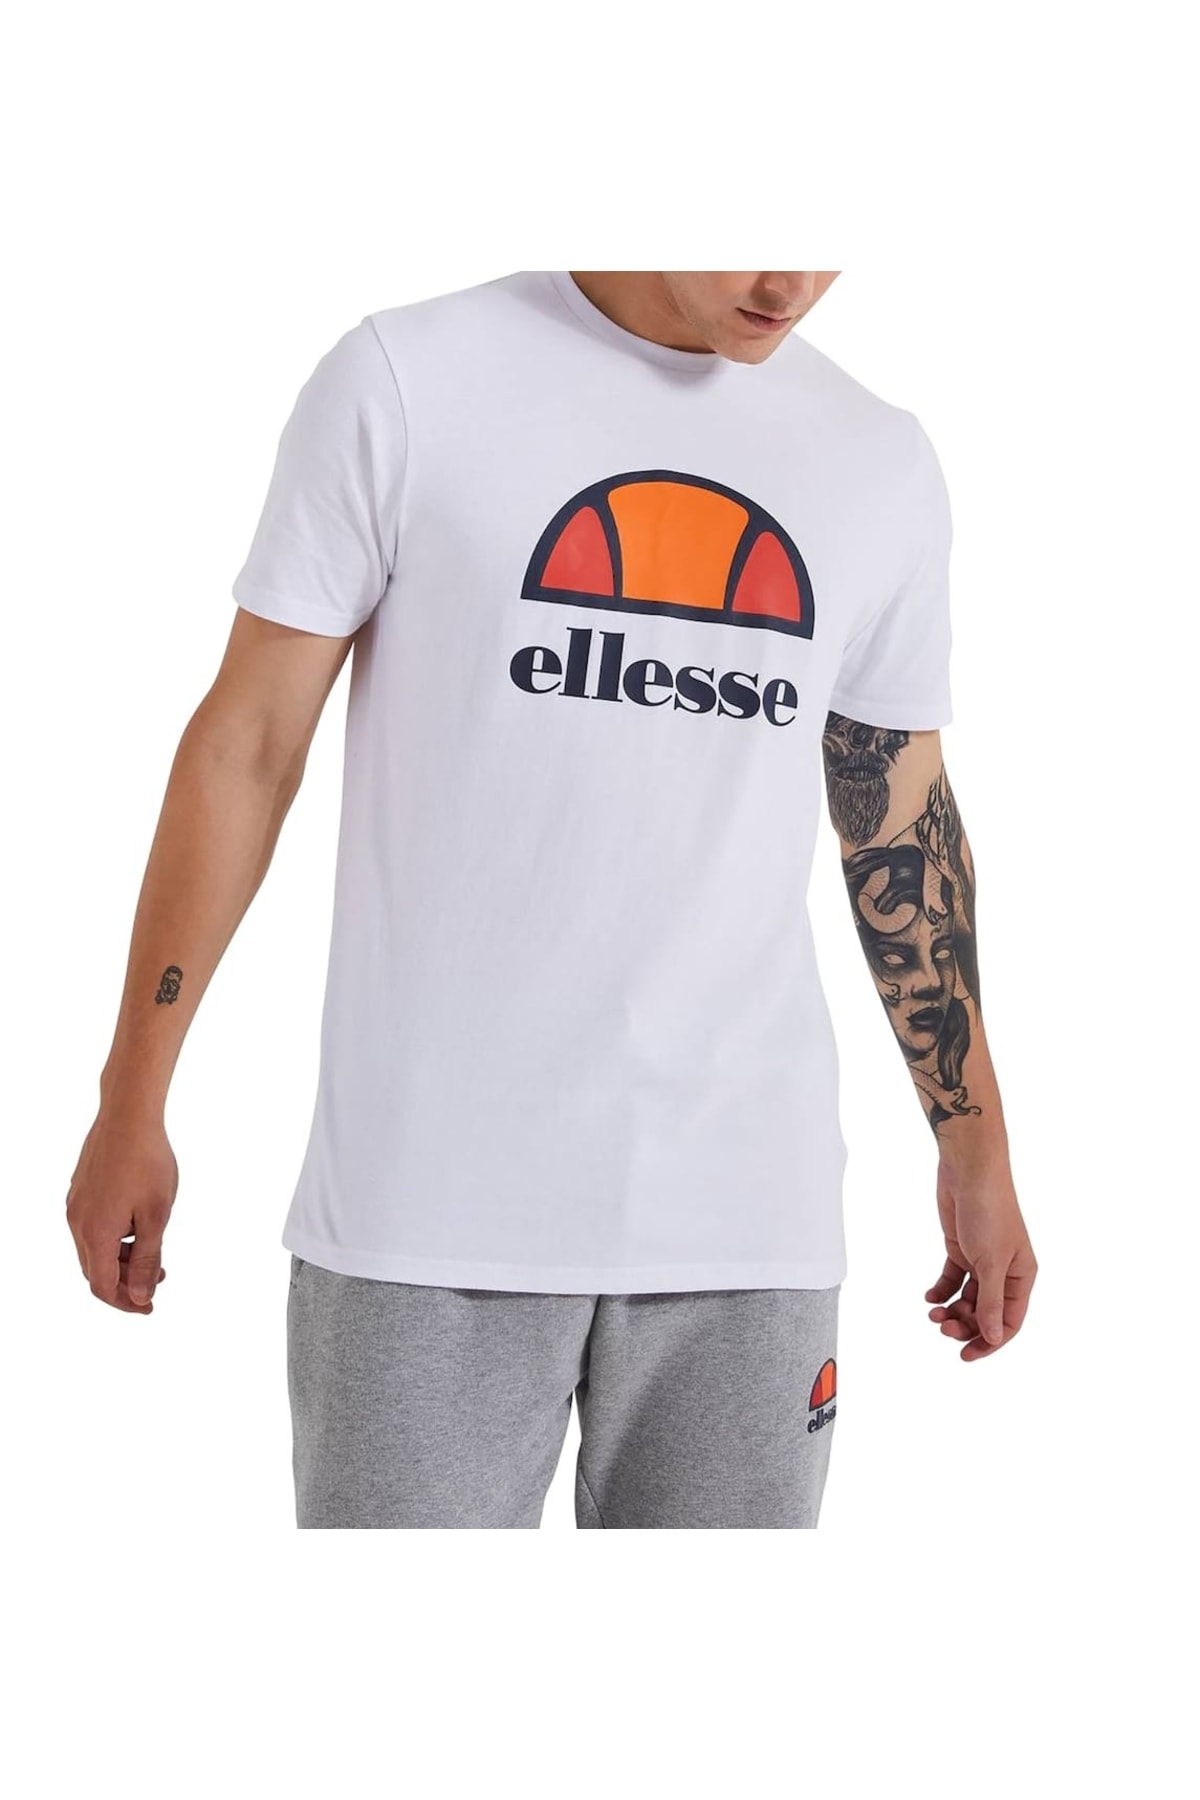 bros Uitschakelen trog Ellesse T-Shirt - White - Regular fit - Trendyol